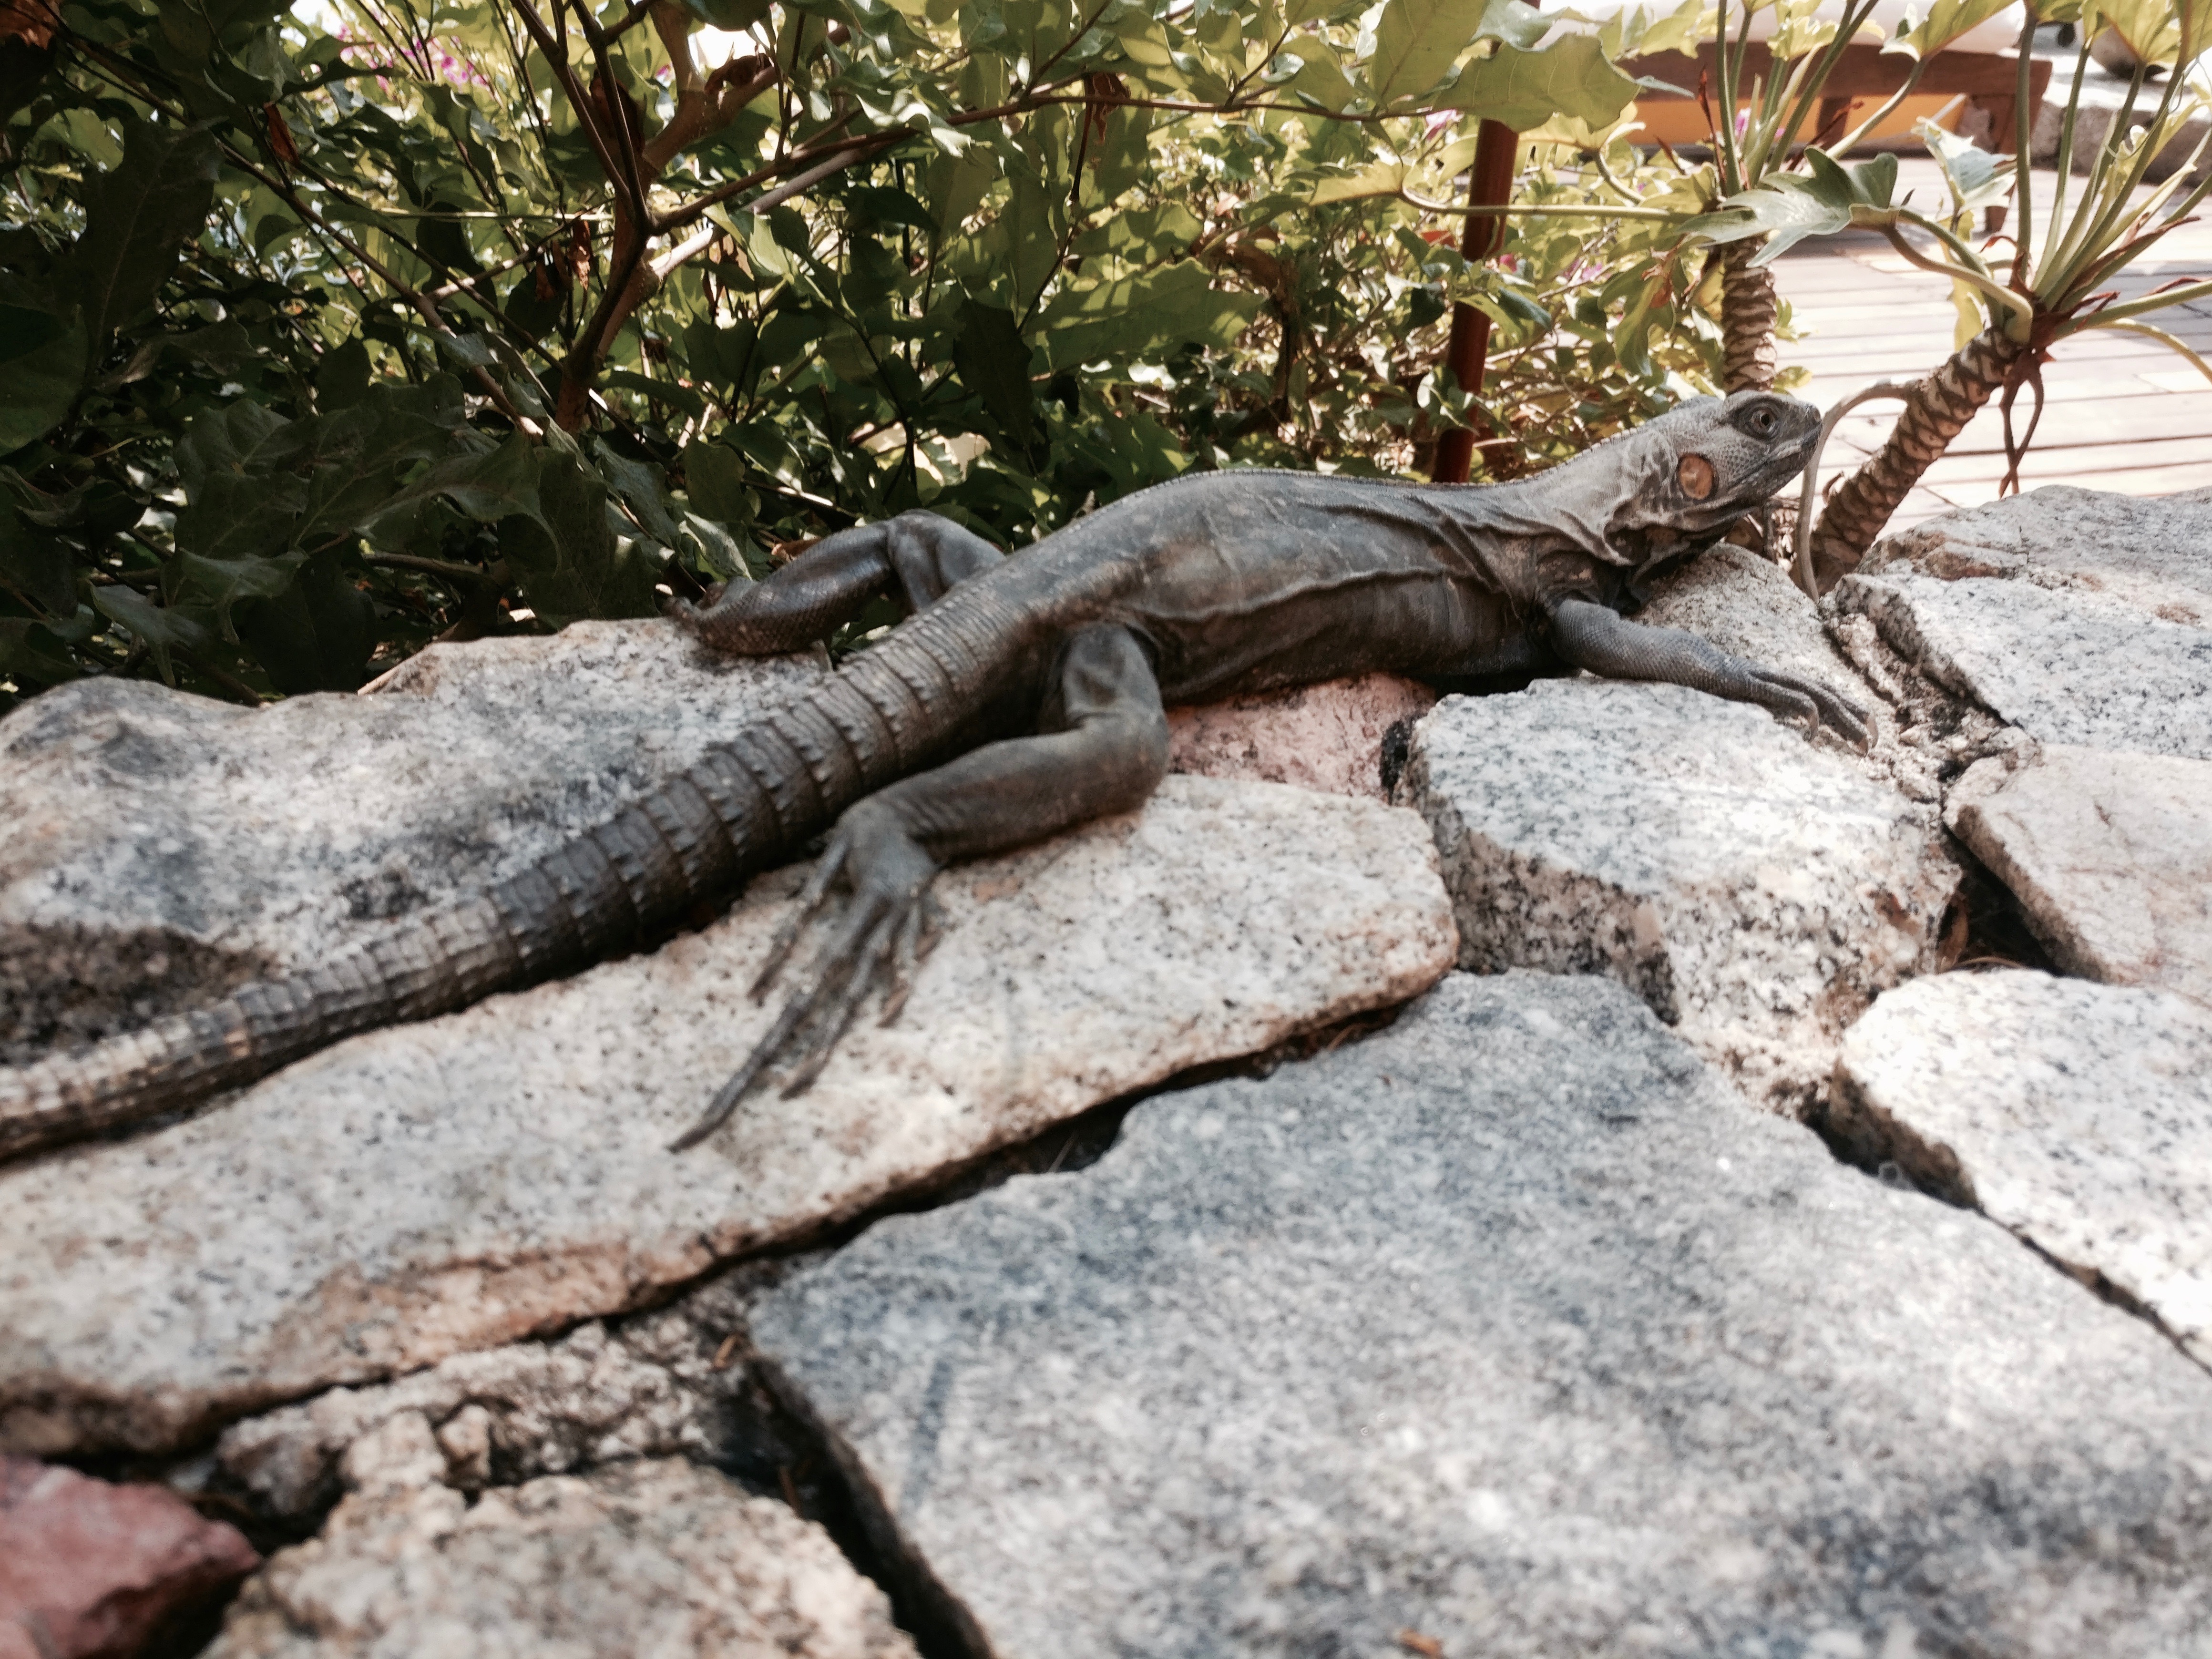 An iguana suns itself on the rocks at Villa Mandarinas